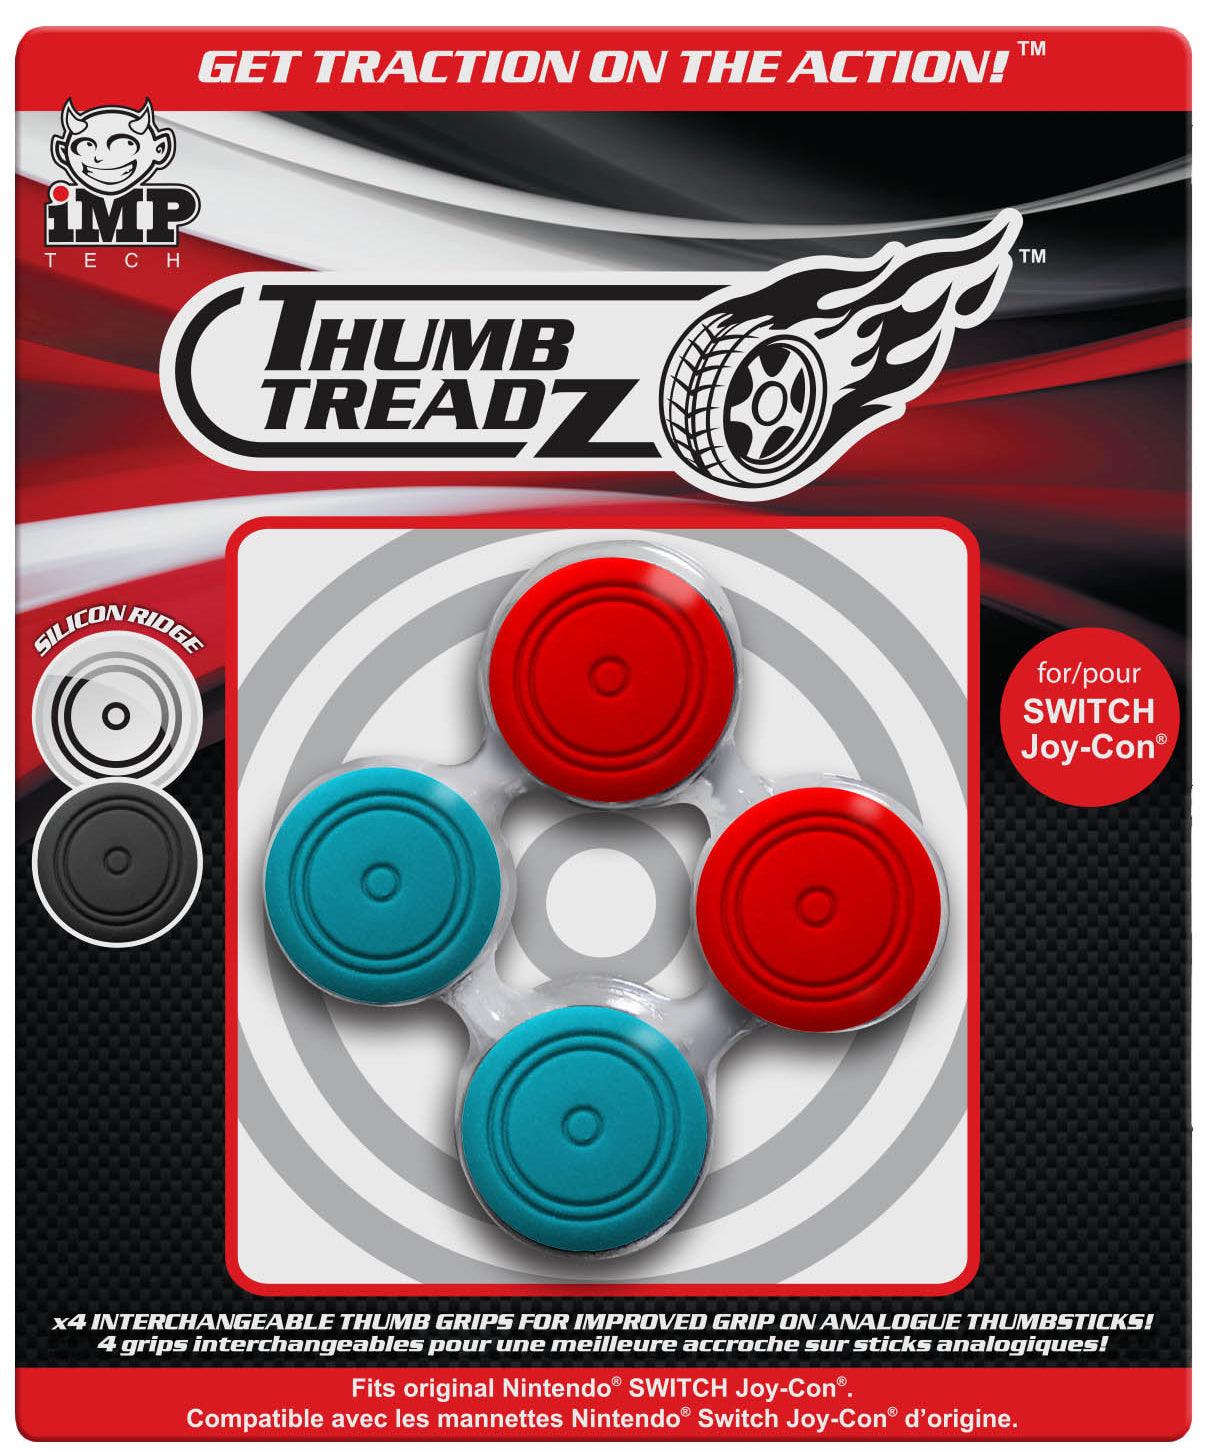 Thumb Treadz Red/Blue - Want a New Gadget